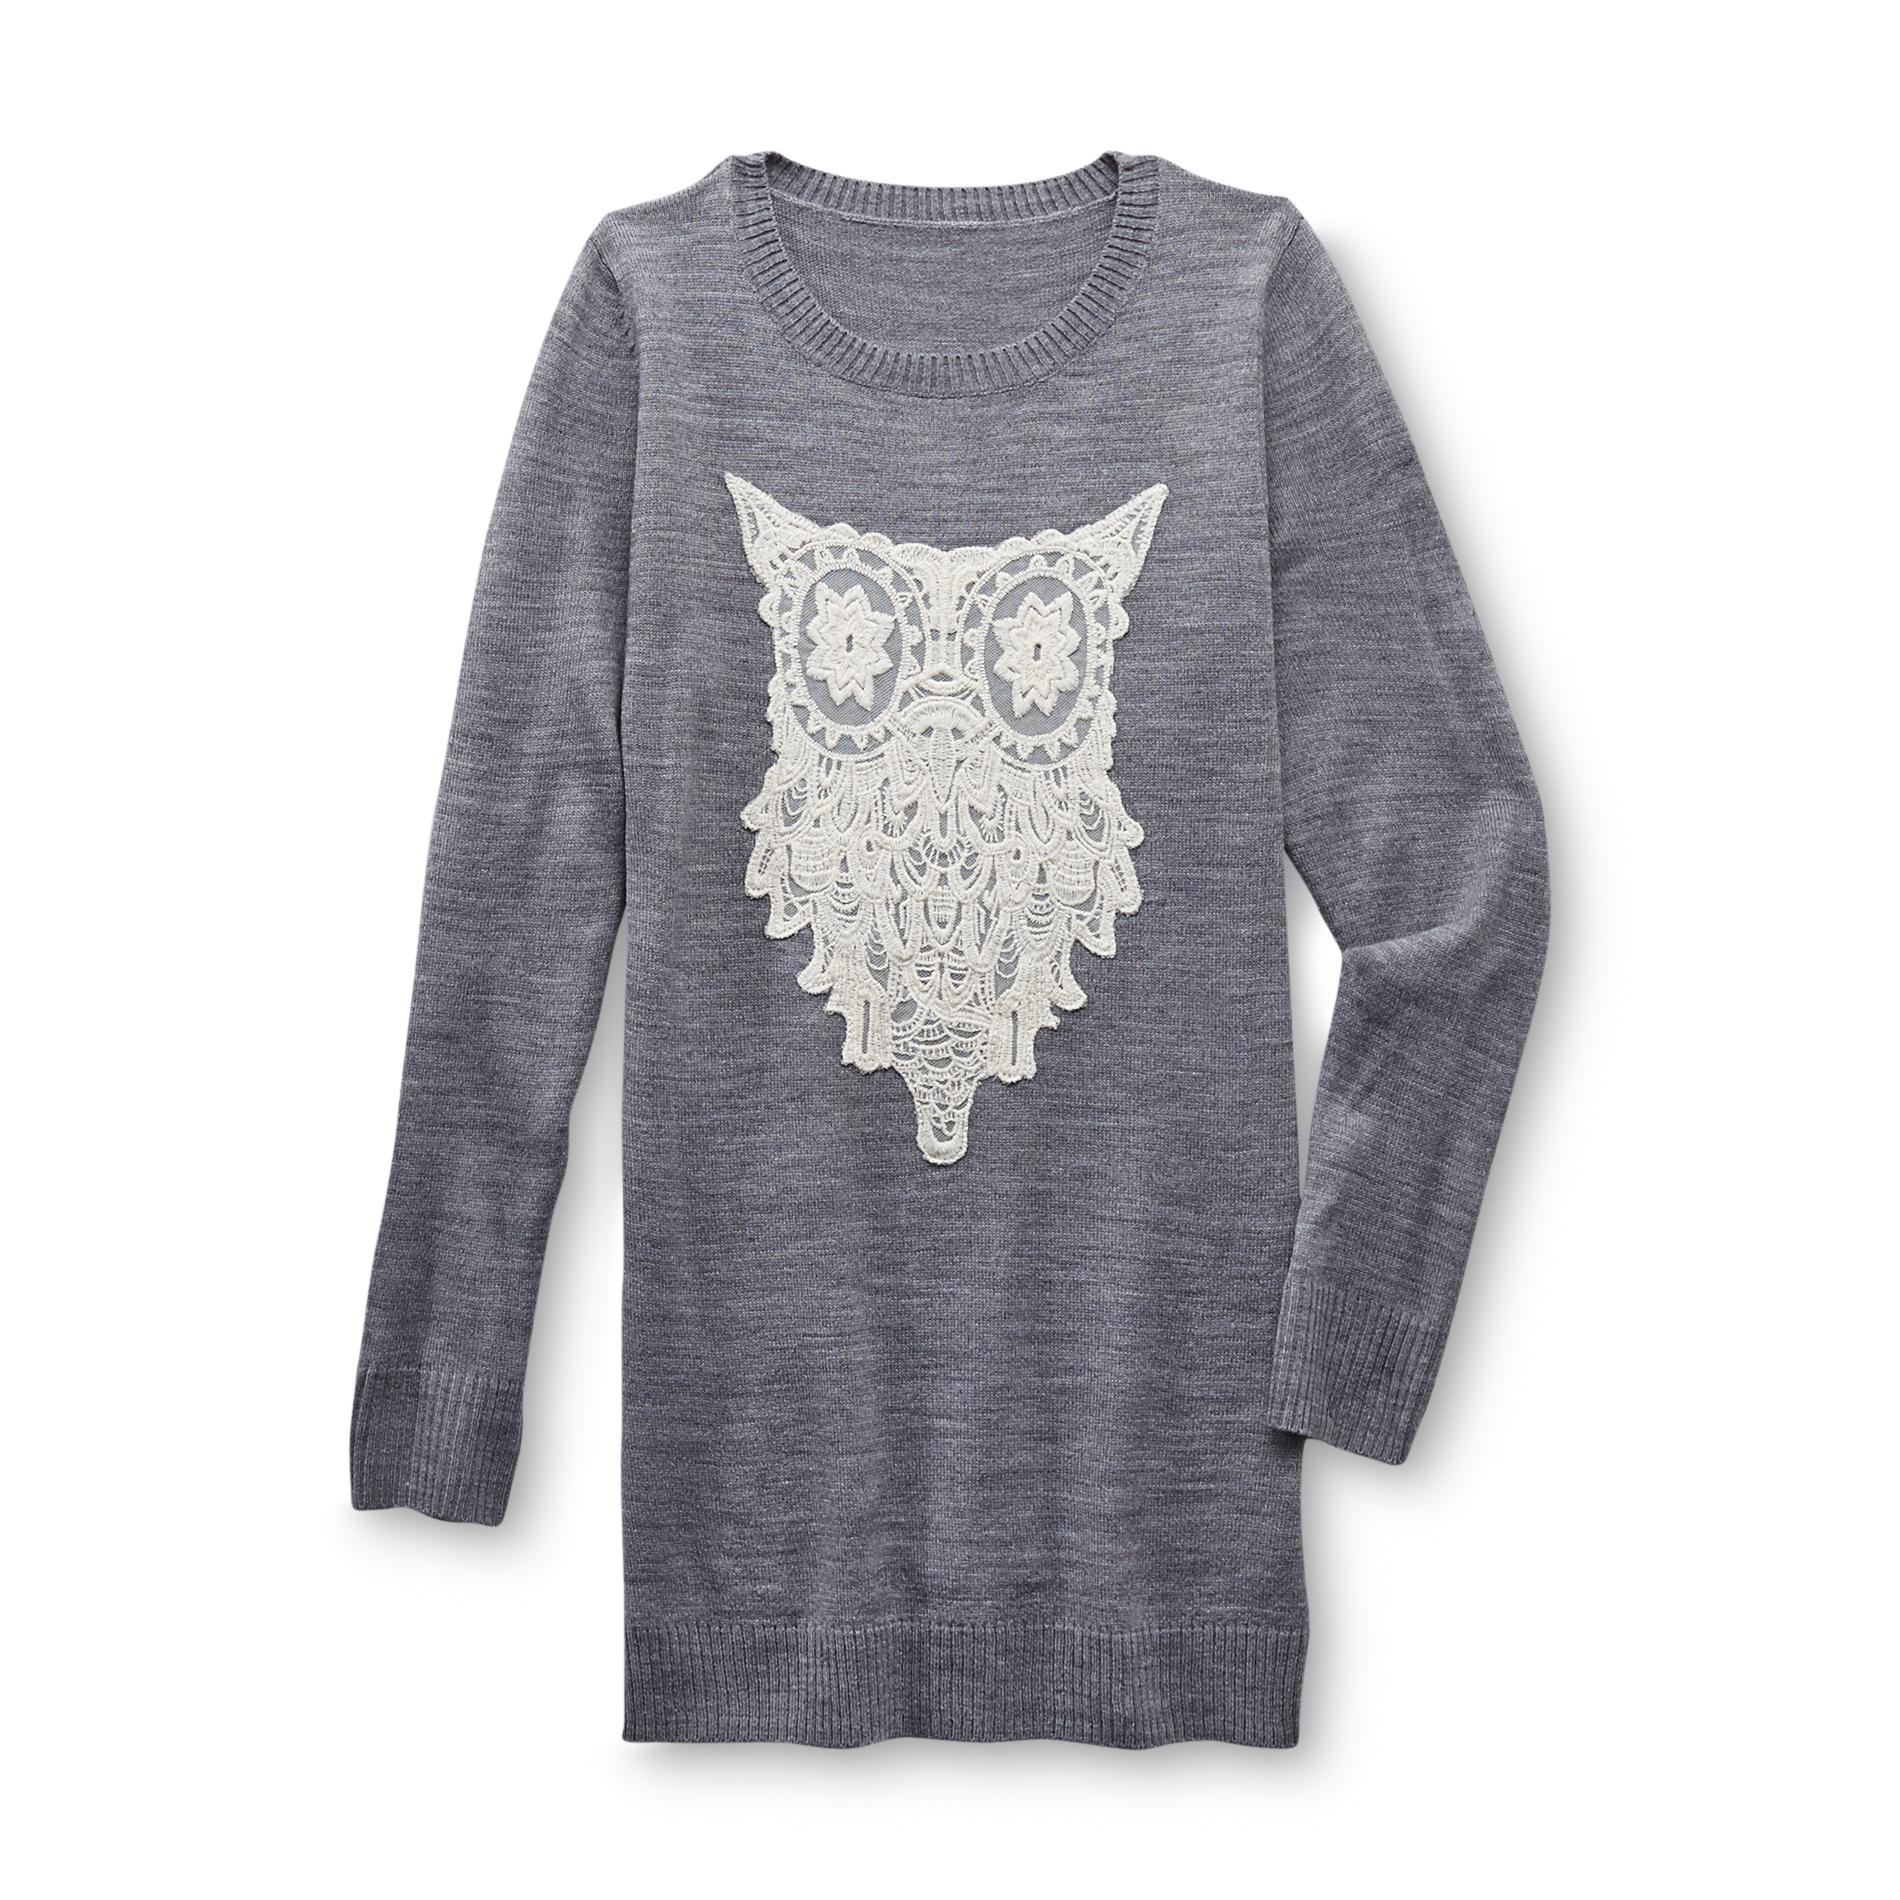 Route 66 Girl's Crochet Applique Tunic Sweater - Owl